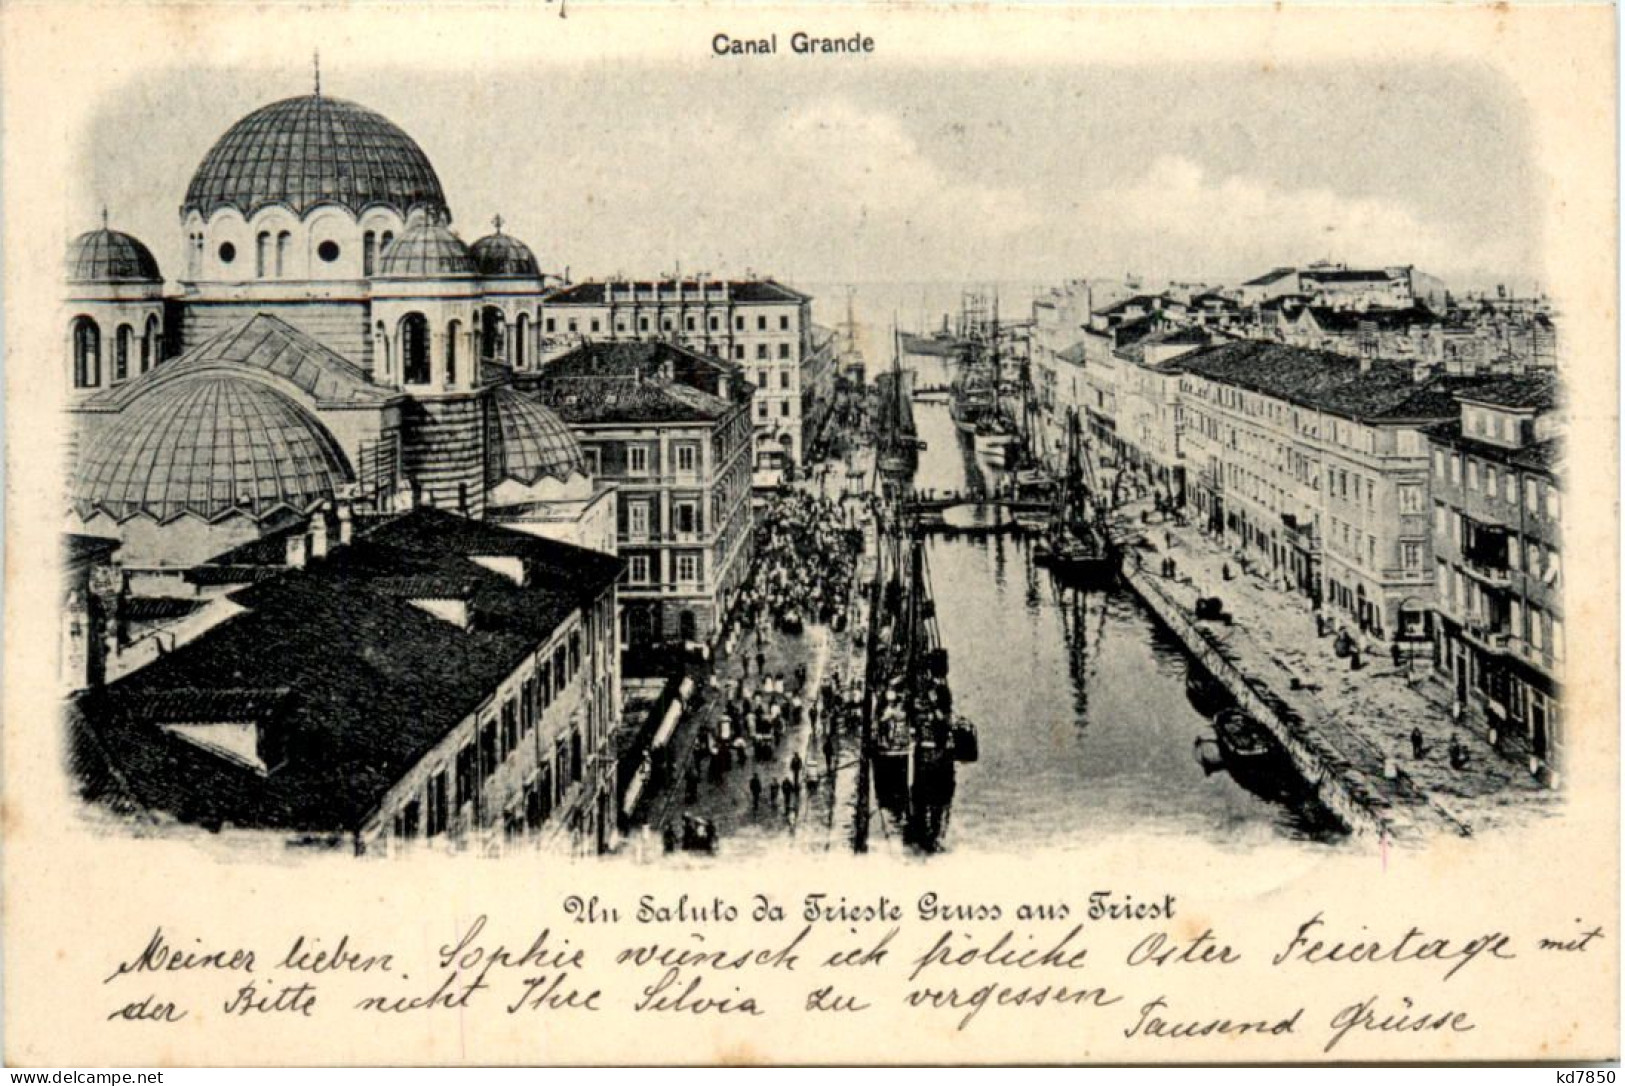 Un Saluto Da Trieste - Canal Grande - Trieste